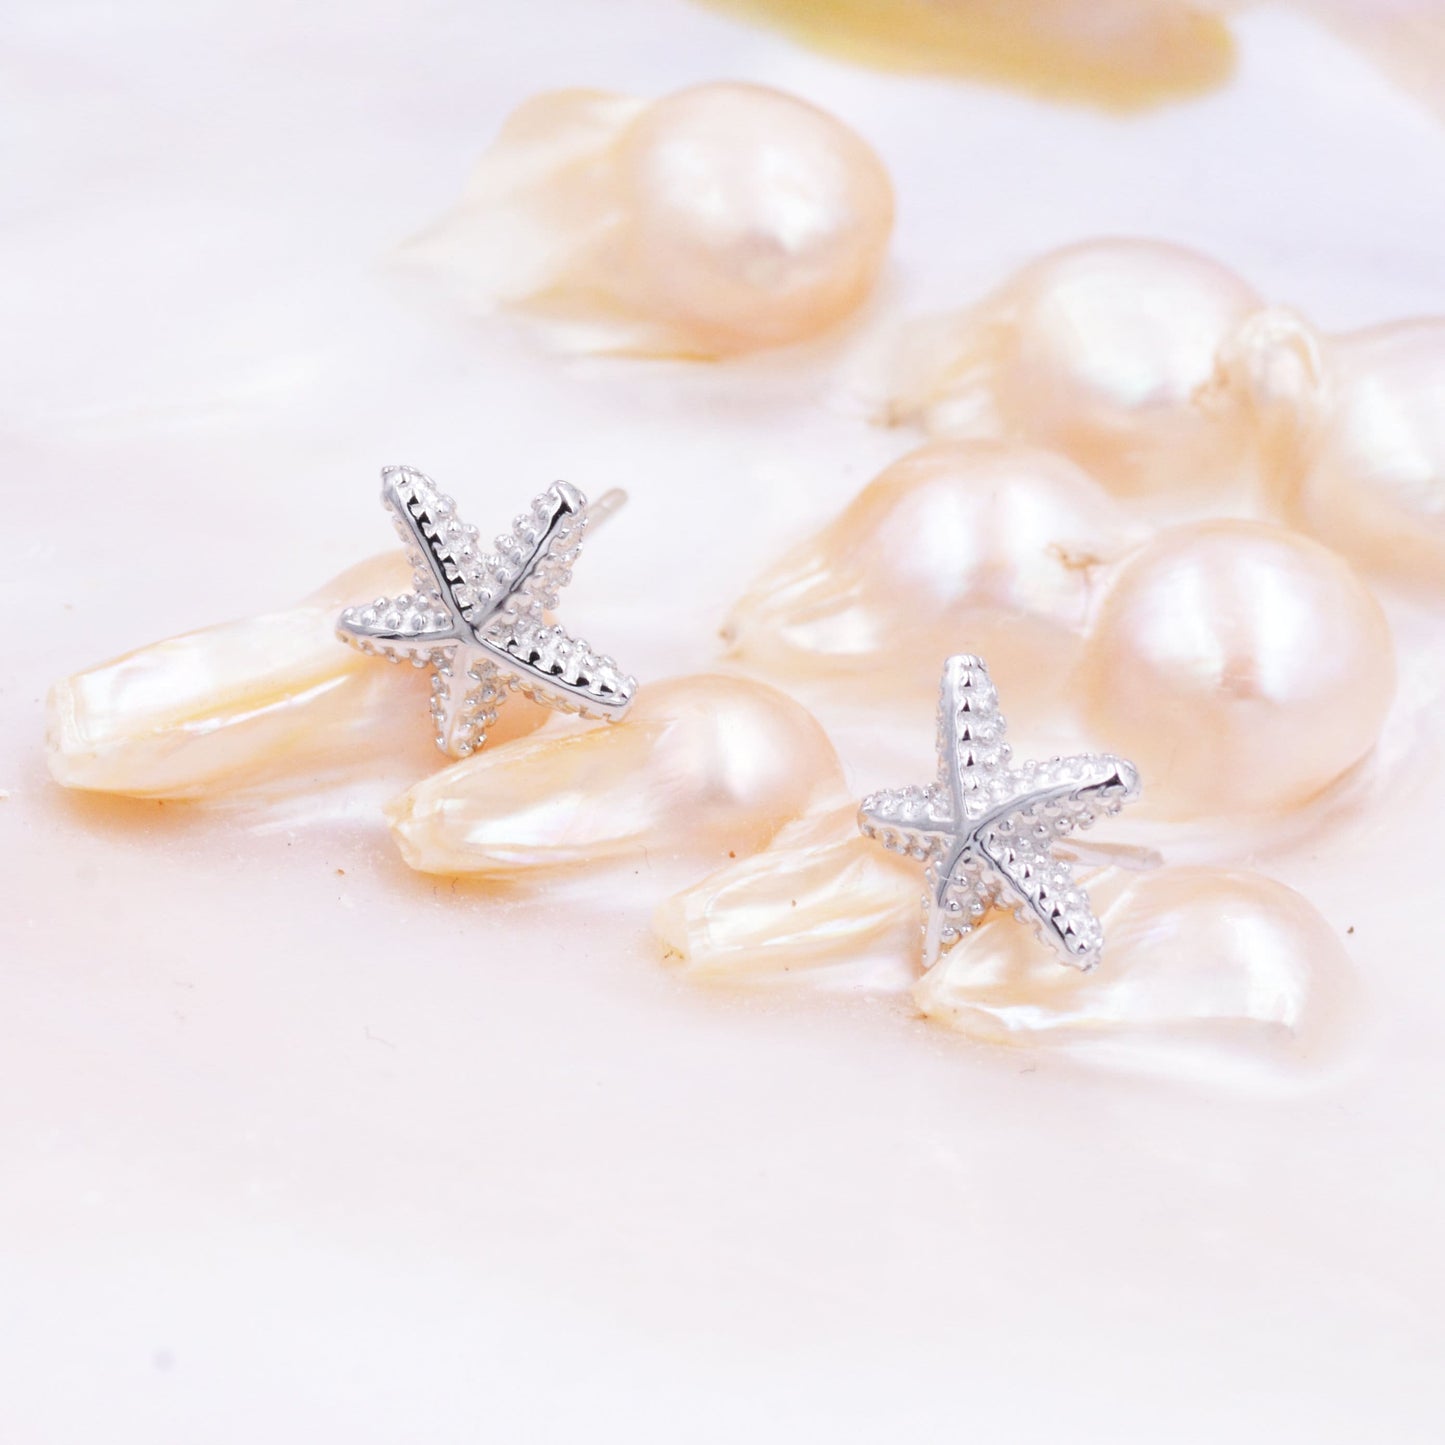 Little Star Fish Stud Earrings in Sterling Silver, Cute Sea Star Stud, Starfish Earrings, Nature Inspired Design